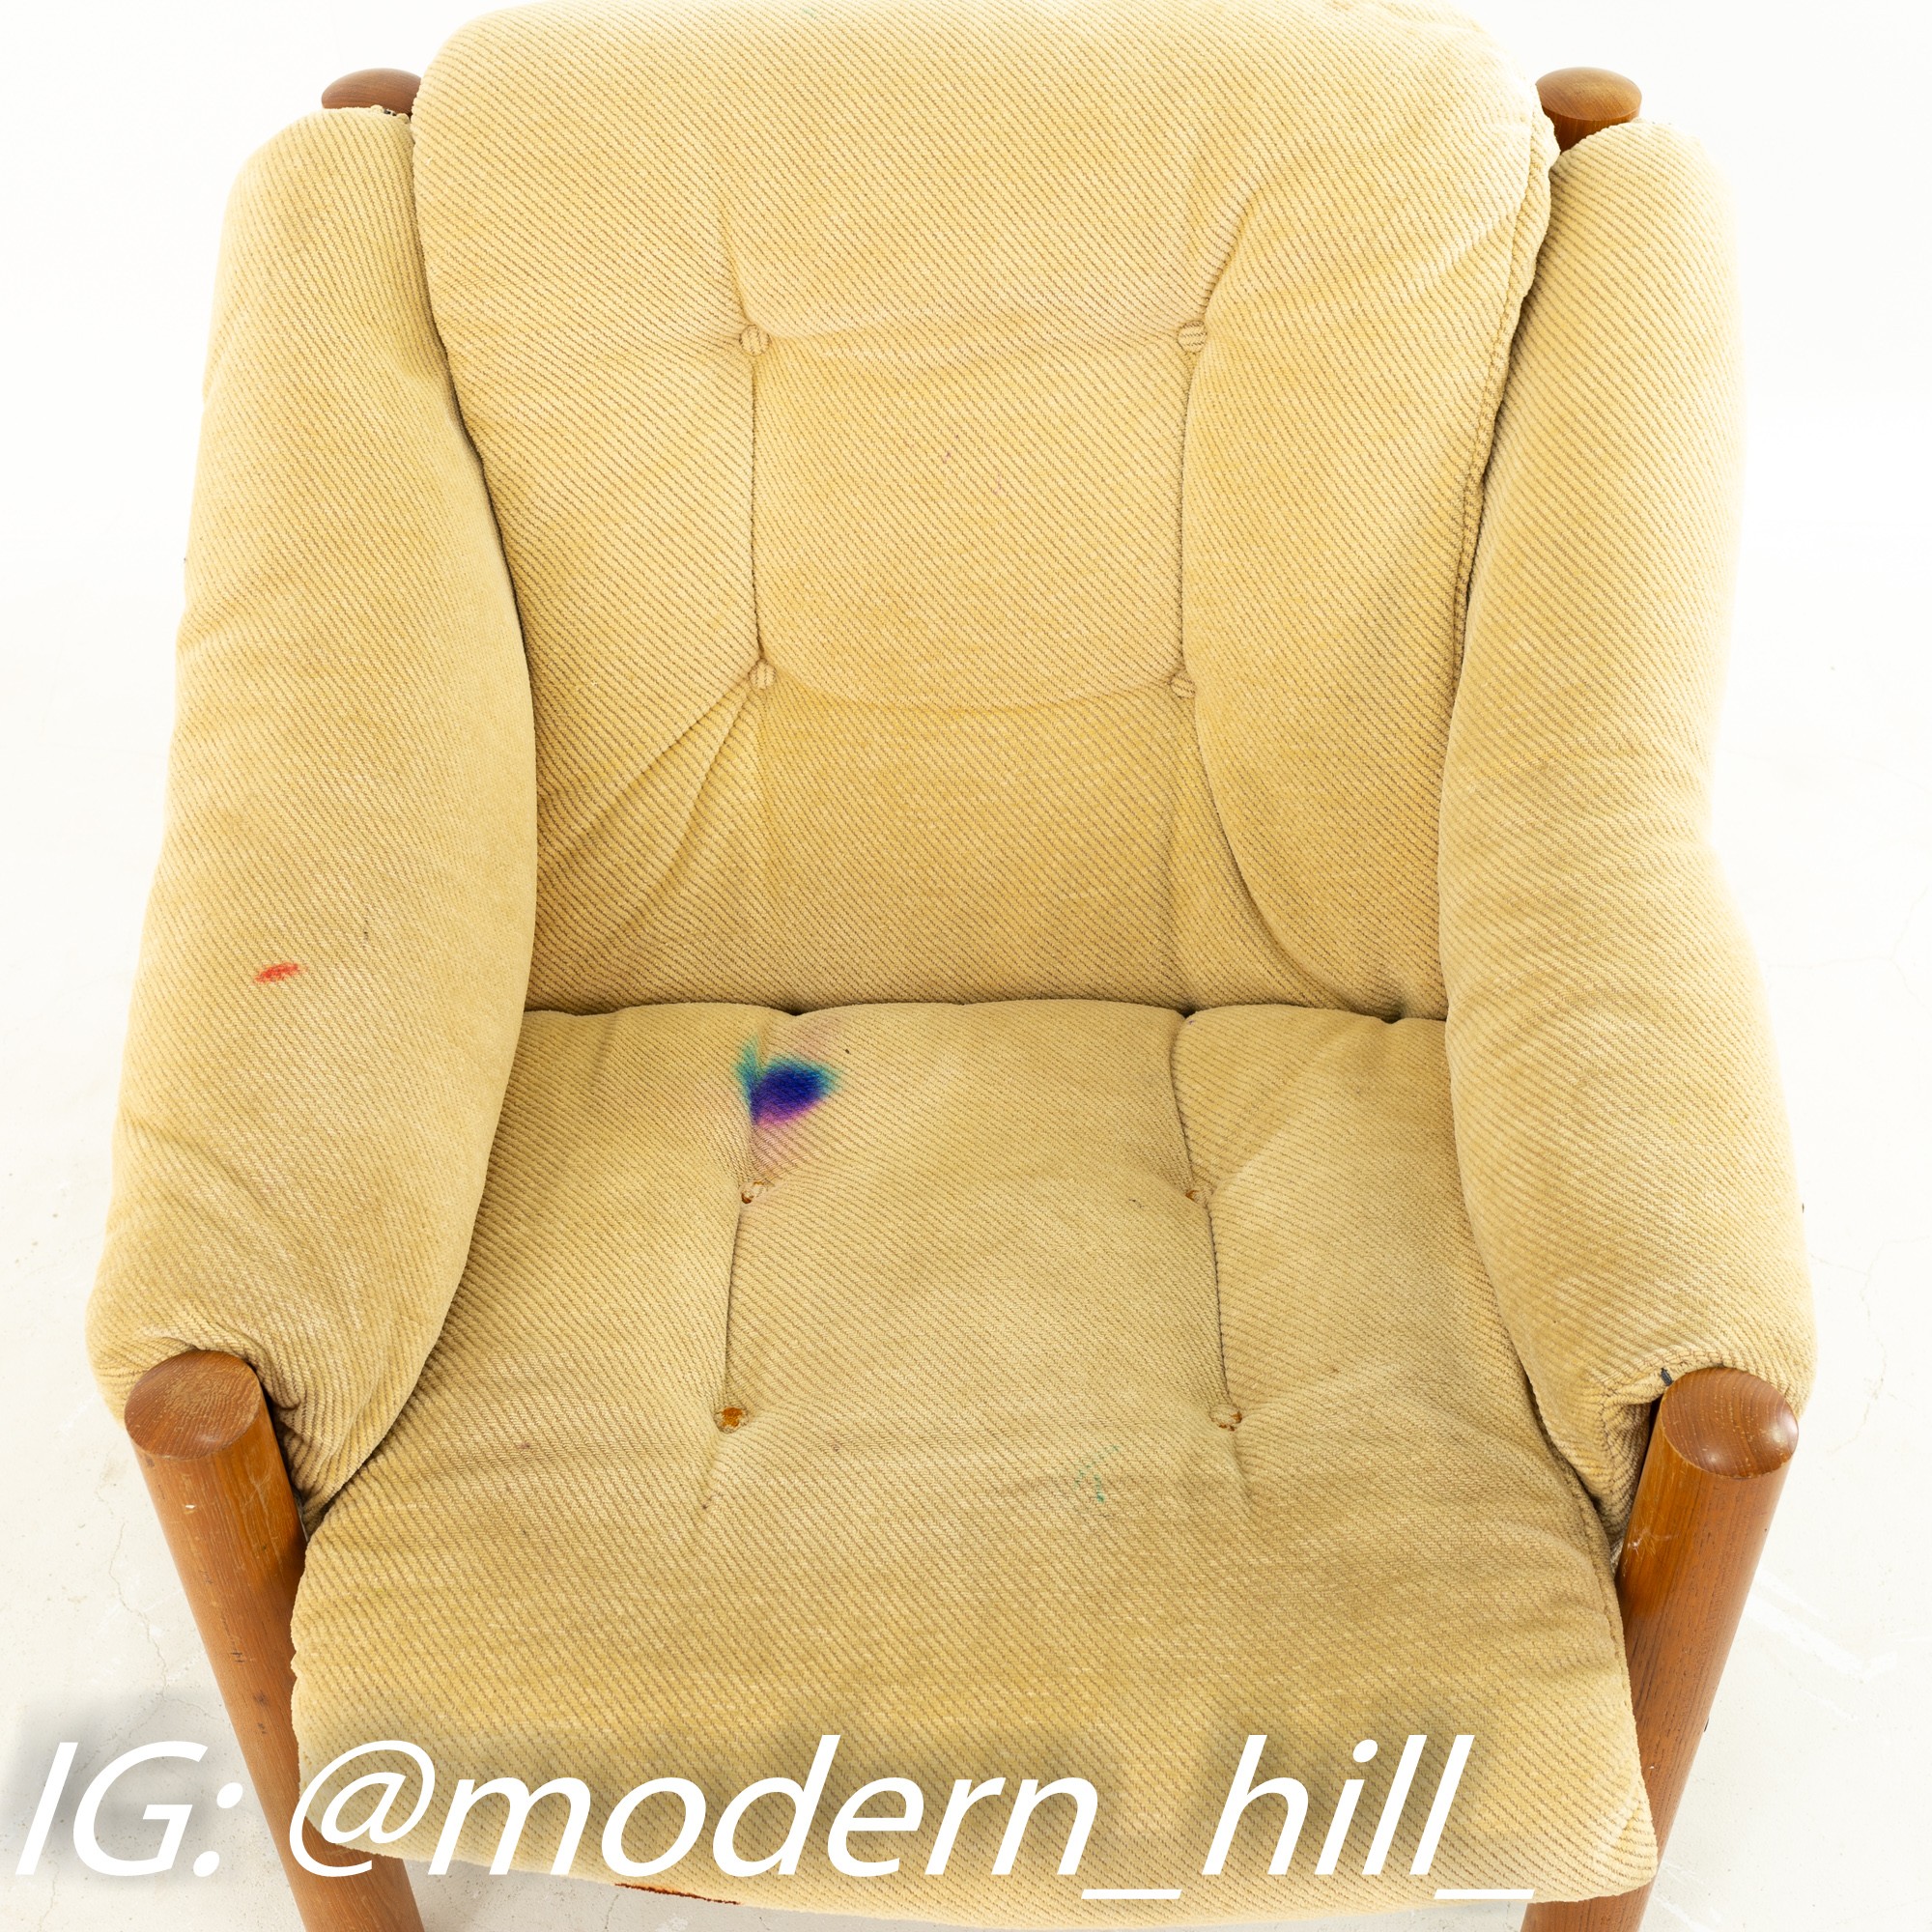 Domino Mobler Mid Century Teak Upholstered Single Armchair